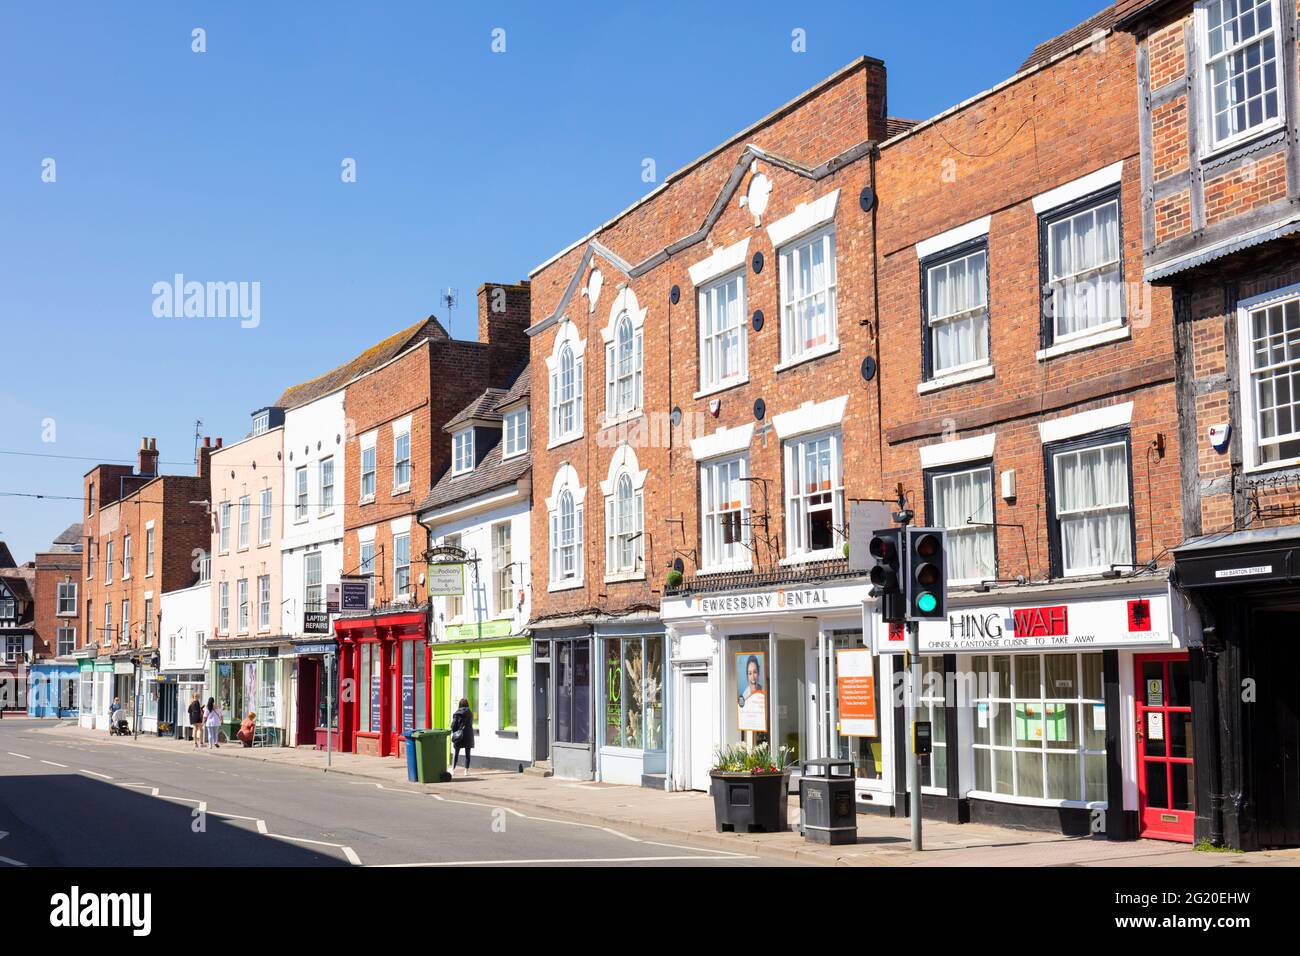 Tewkesbury Town centre negozi ed edifici medievali Barton Street A38 Tewkesbury, Gloucestershire, Inghilterra, GB, Regno Unito, Europa Foto Stock